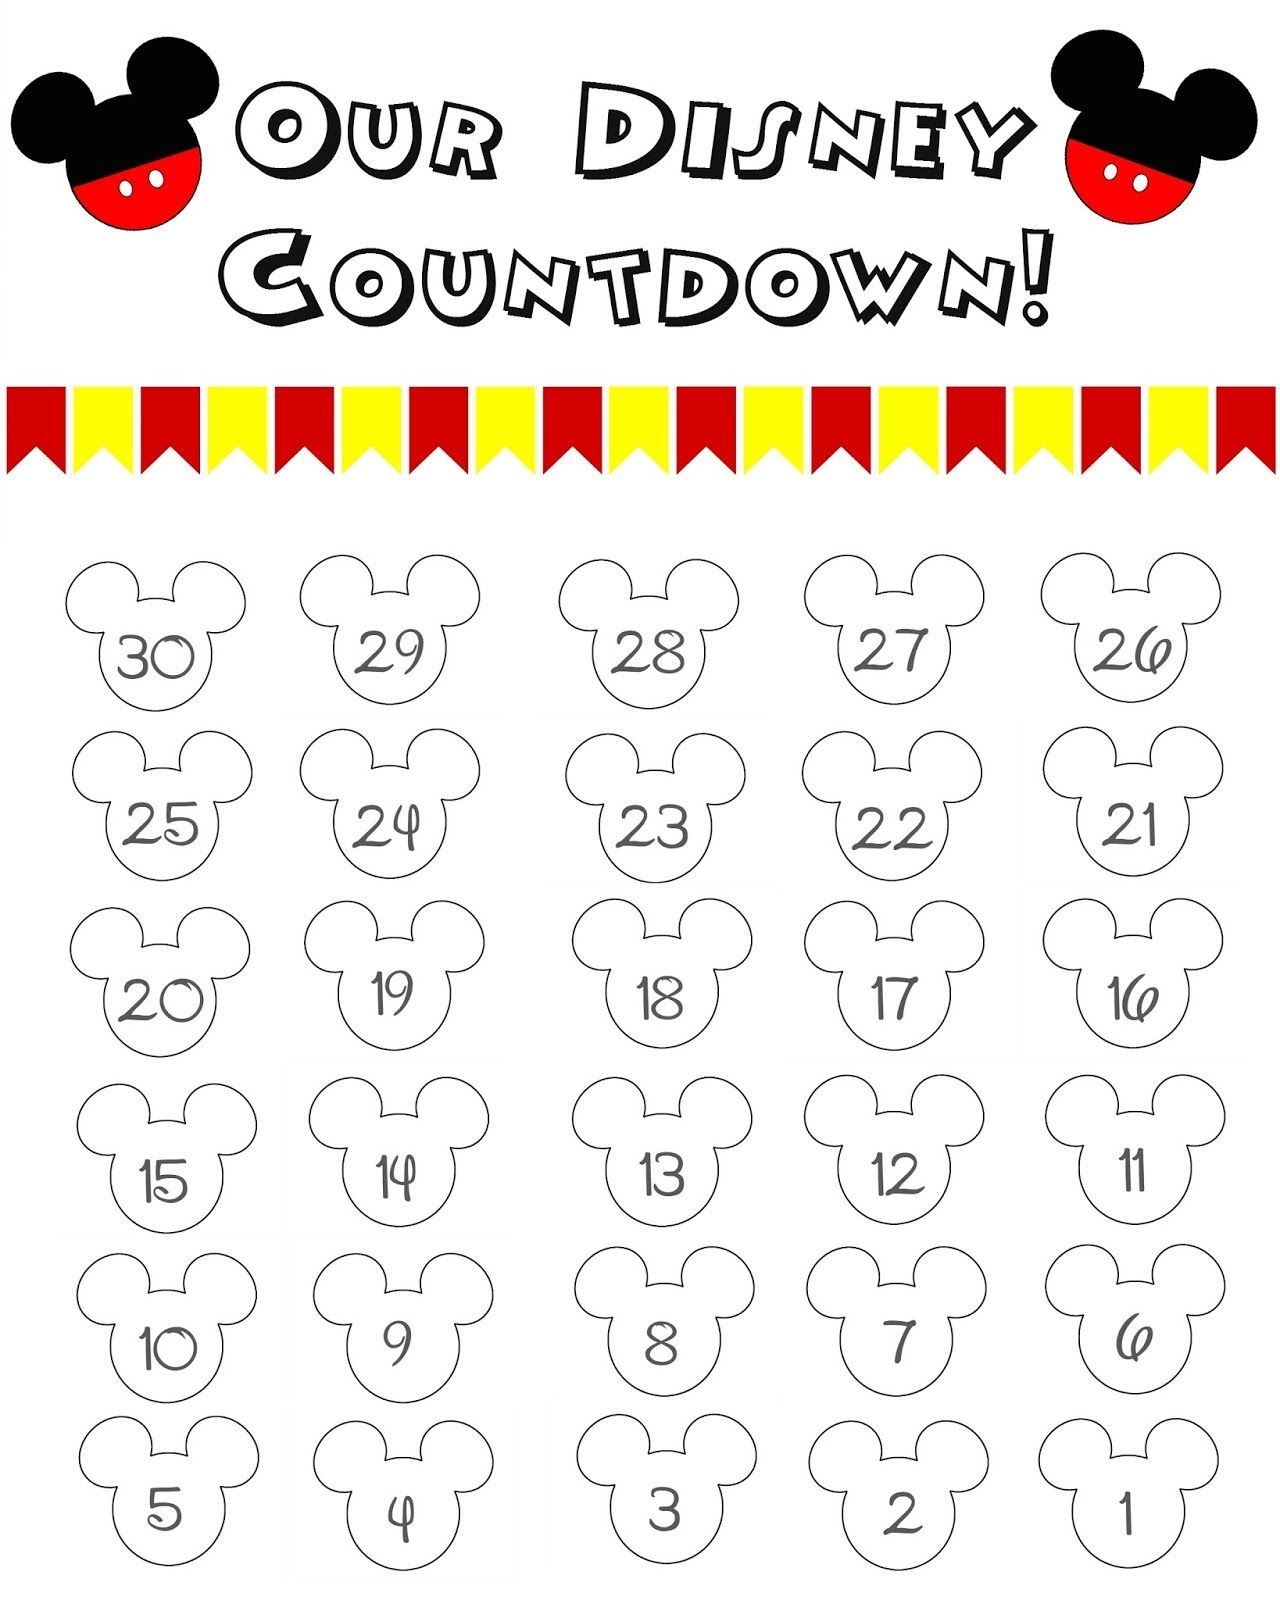 Disney World Countdown Calendar Free Printable!! The